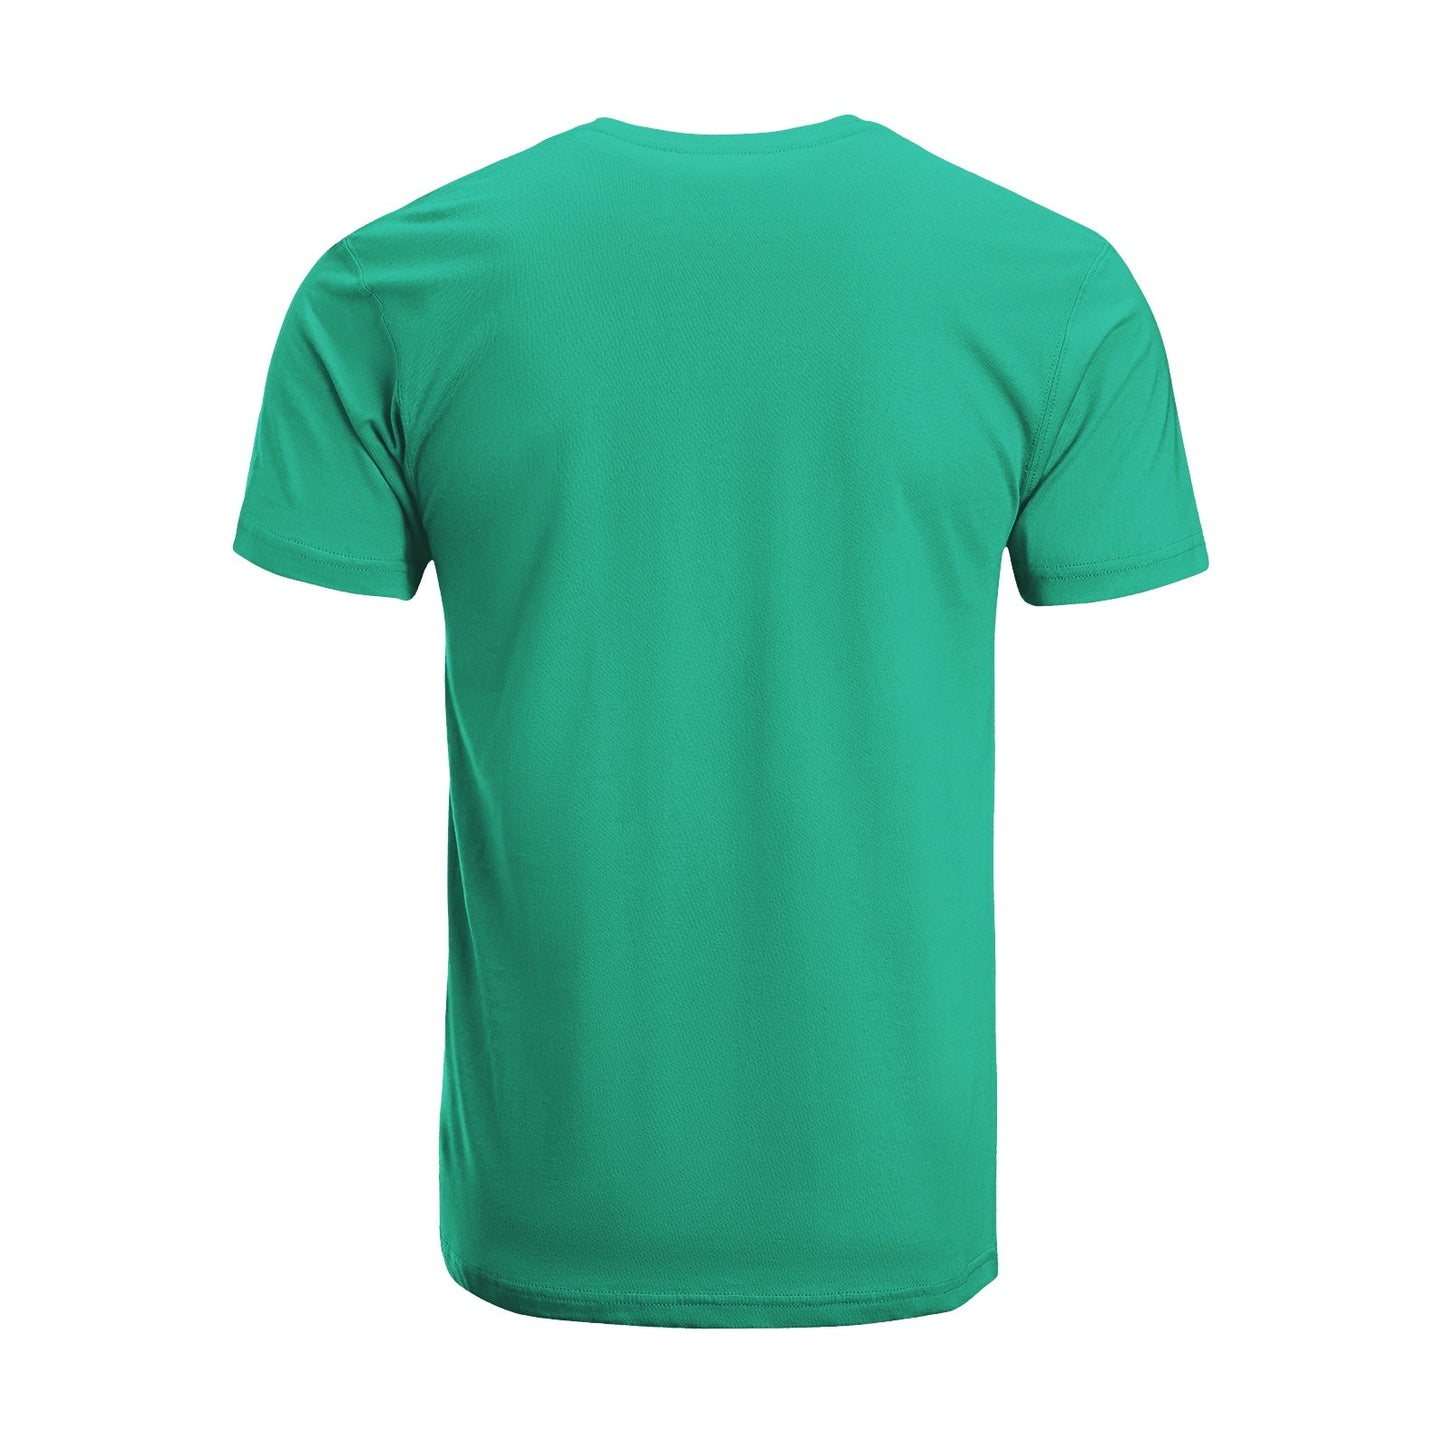 Unisex Short Sleeve Crew Neck Cotton Jersey T-Shirt VEGAN 19